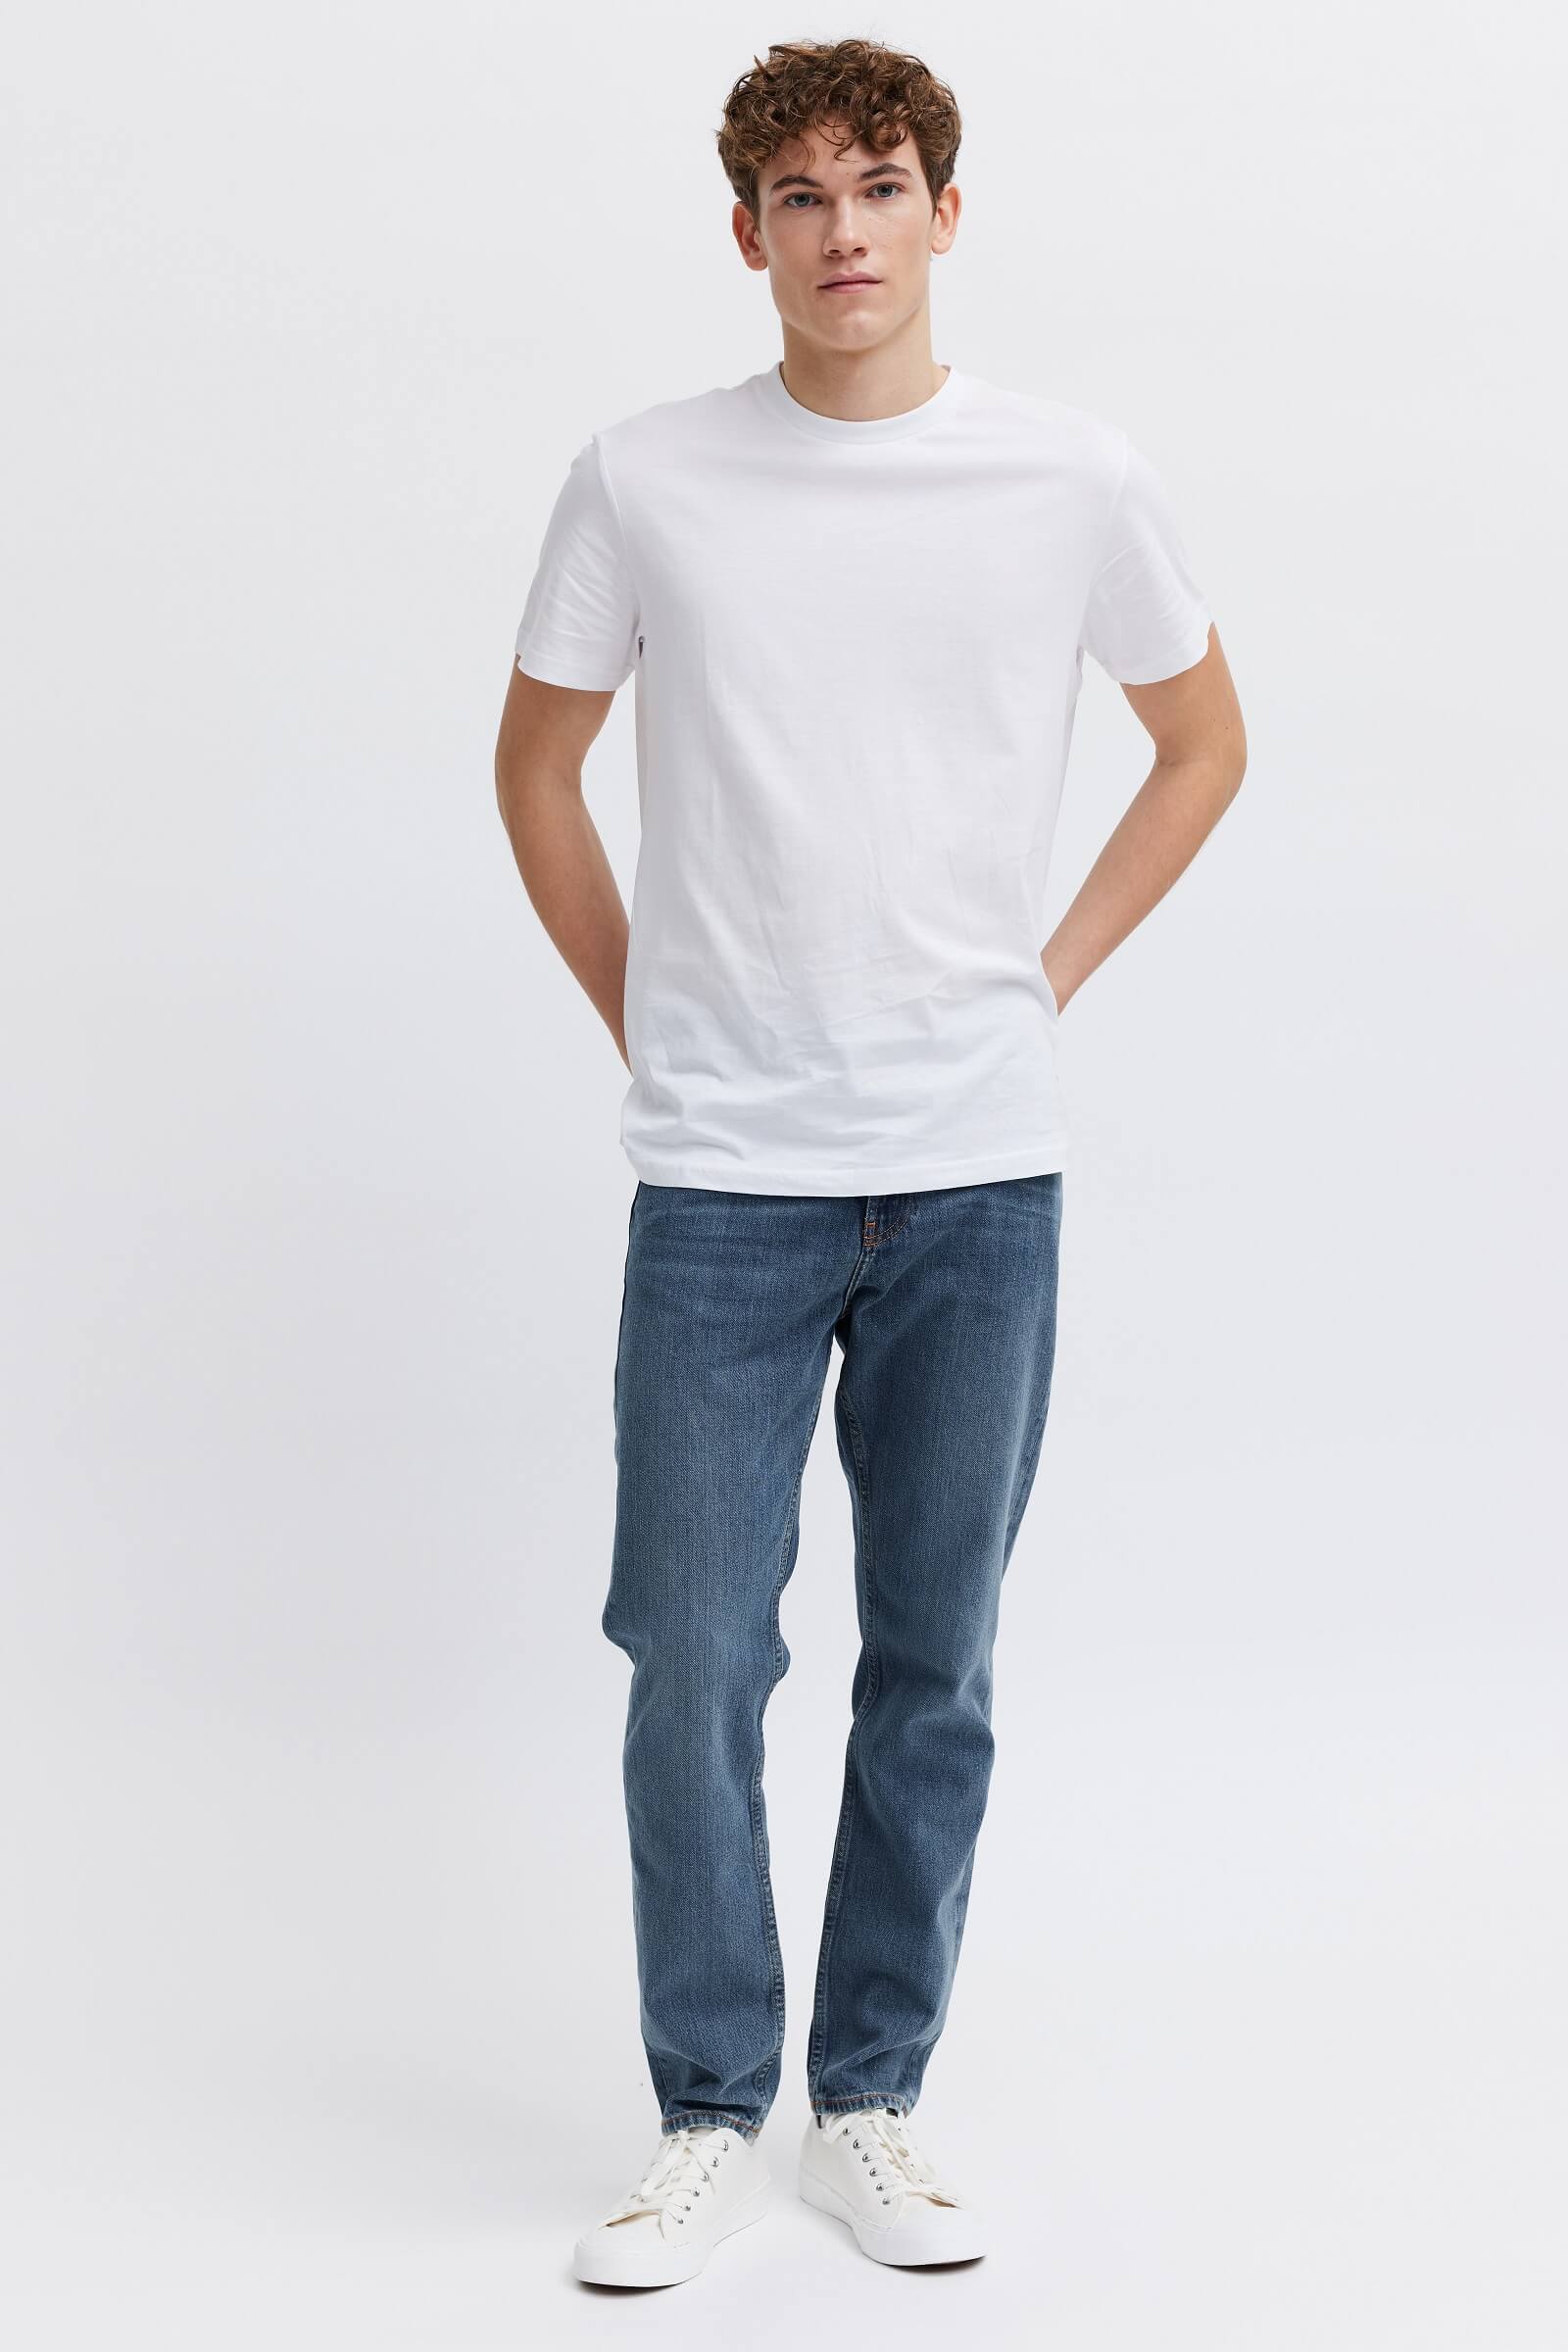 Sustainable blue jeans. Men's regular classic fit 